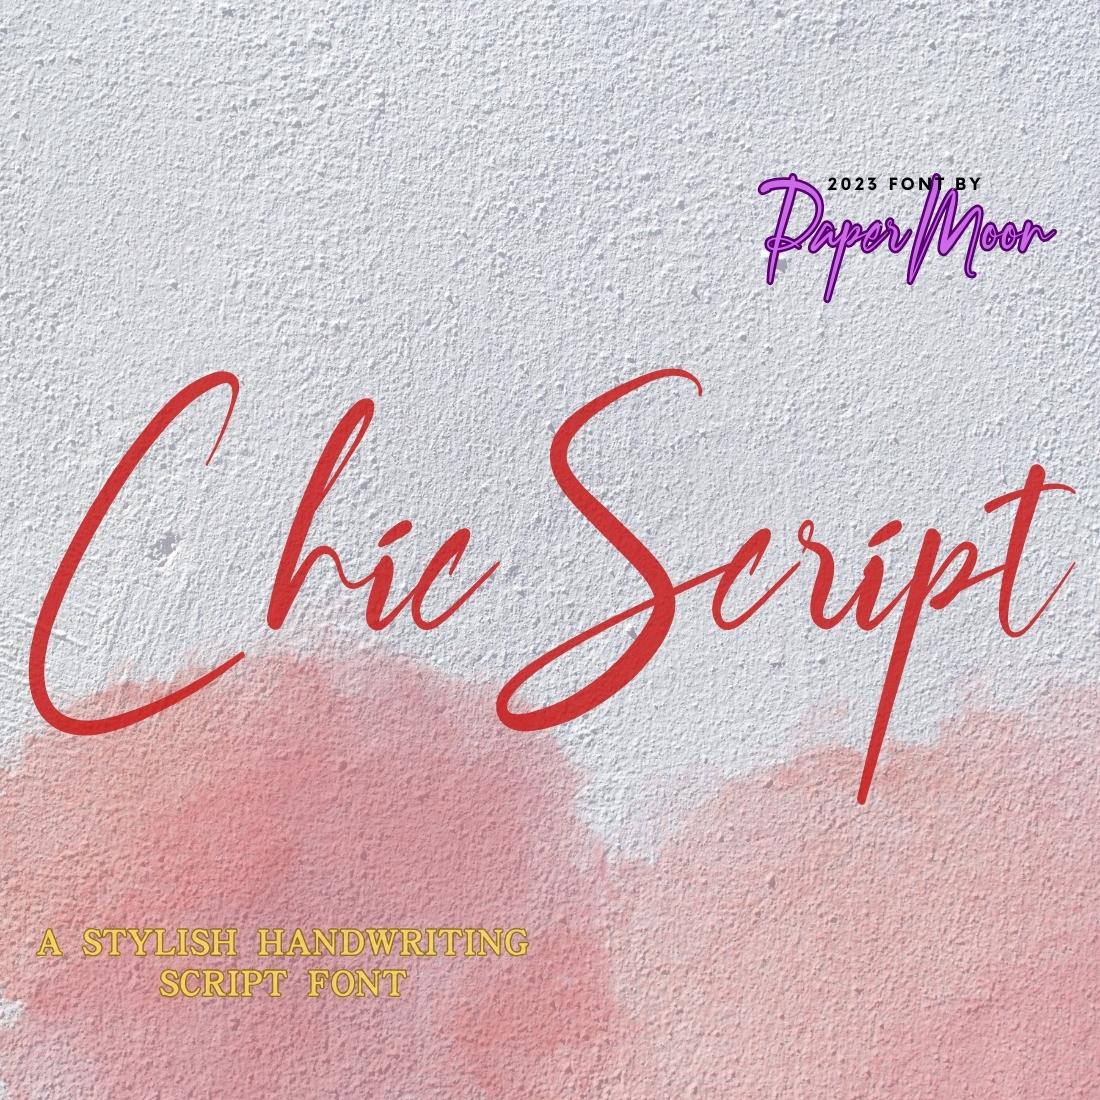 ChicScript Stylish Handwritten Font cover image.